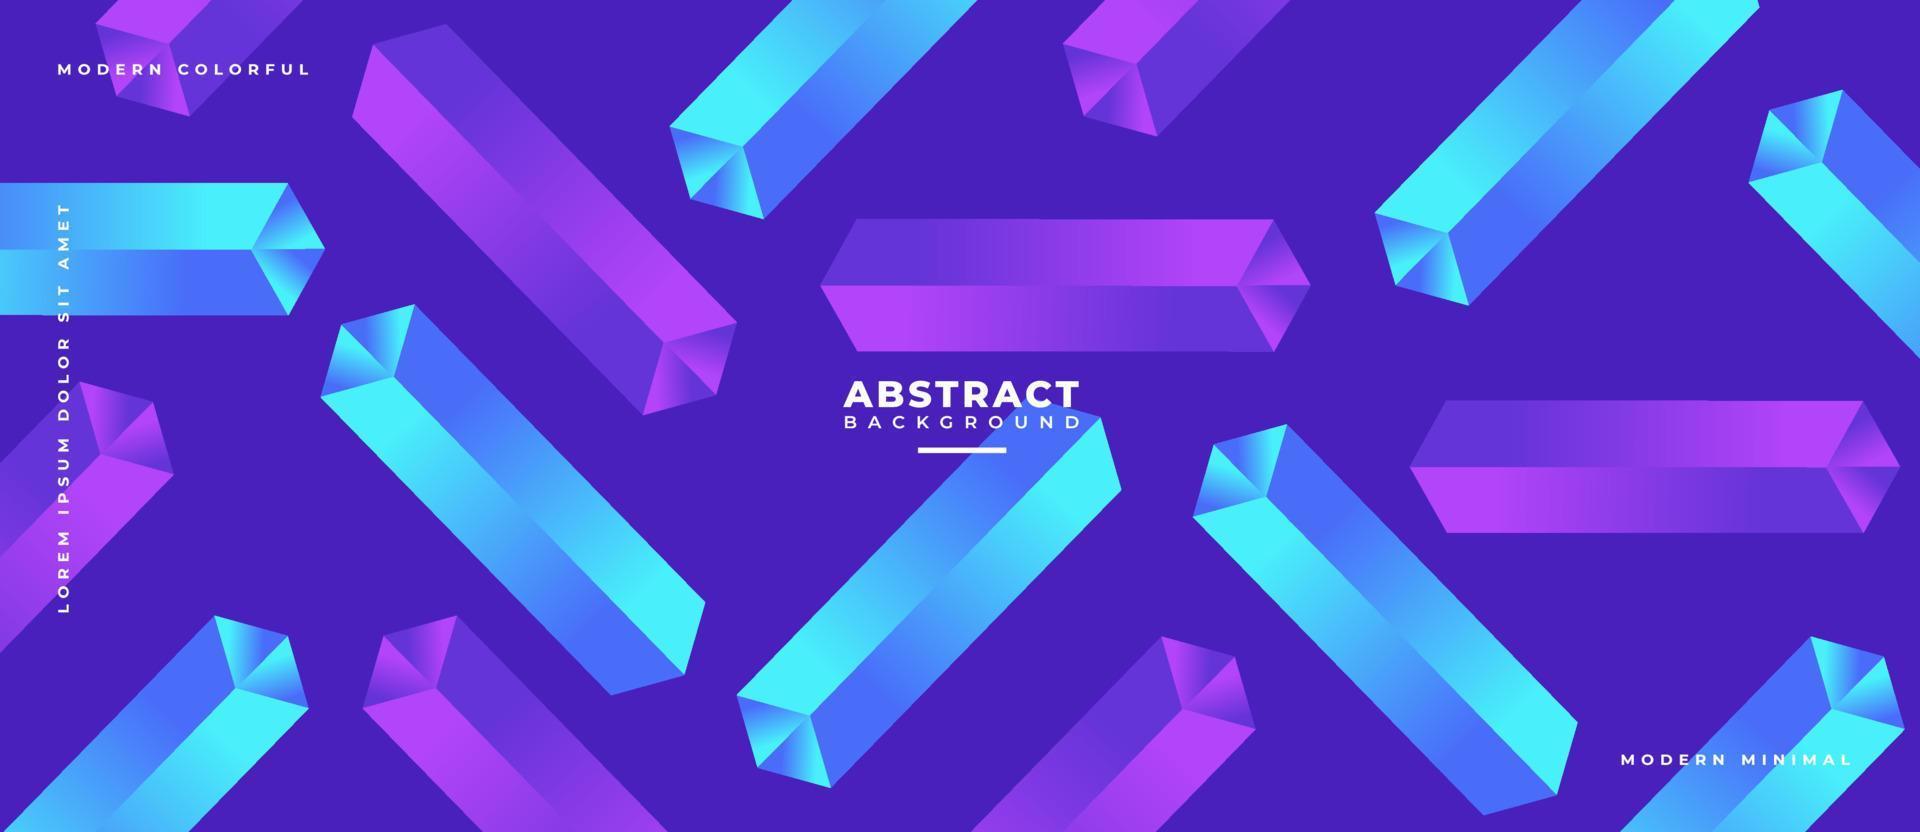 colorido degradado animado rectángulo azul, púrpura. Fondo abstracto futurista de forma geométrica 3d. vector